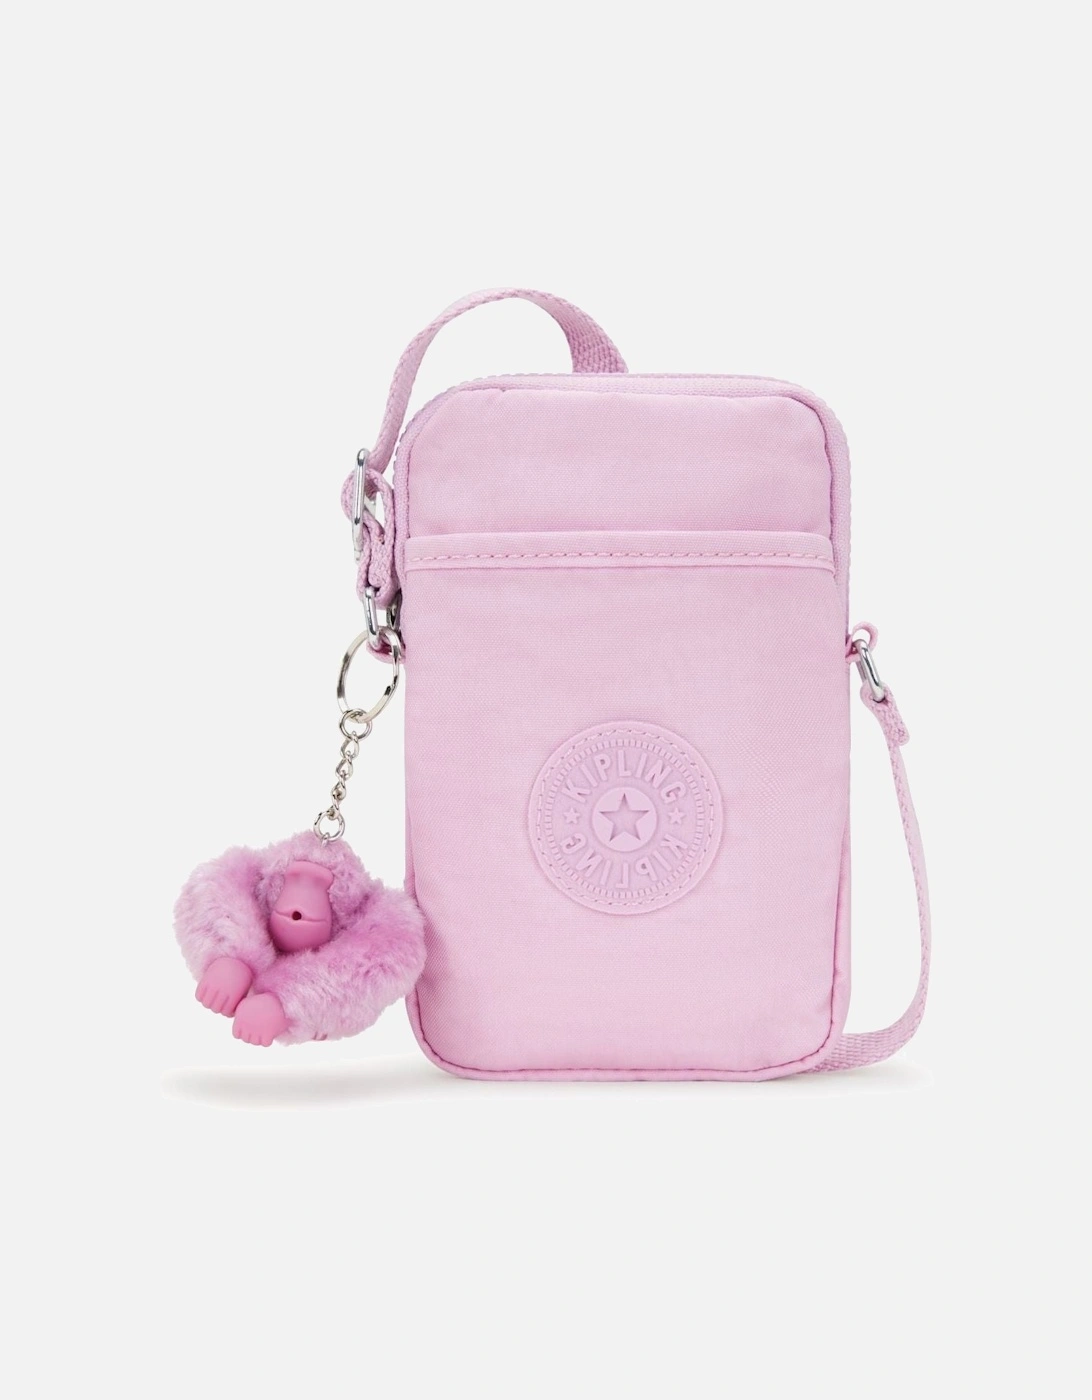 Tally Phone Handbag in Blooming pink, 2 of 1